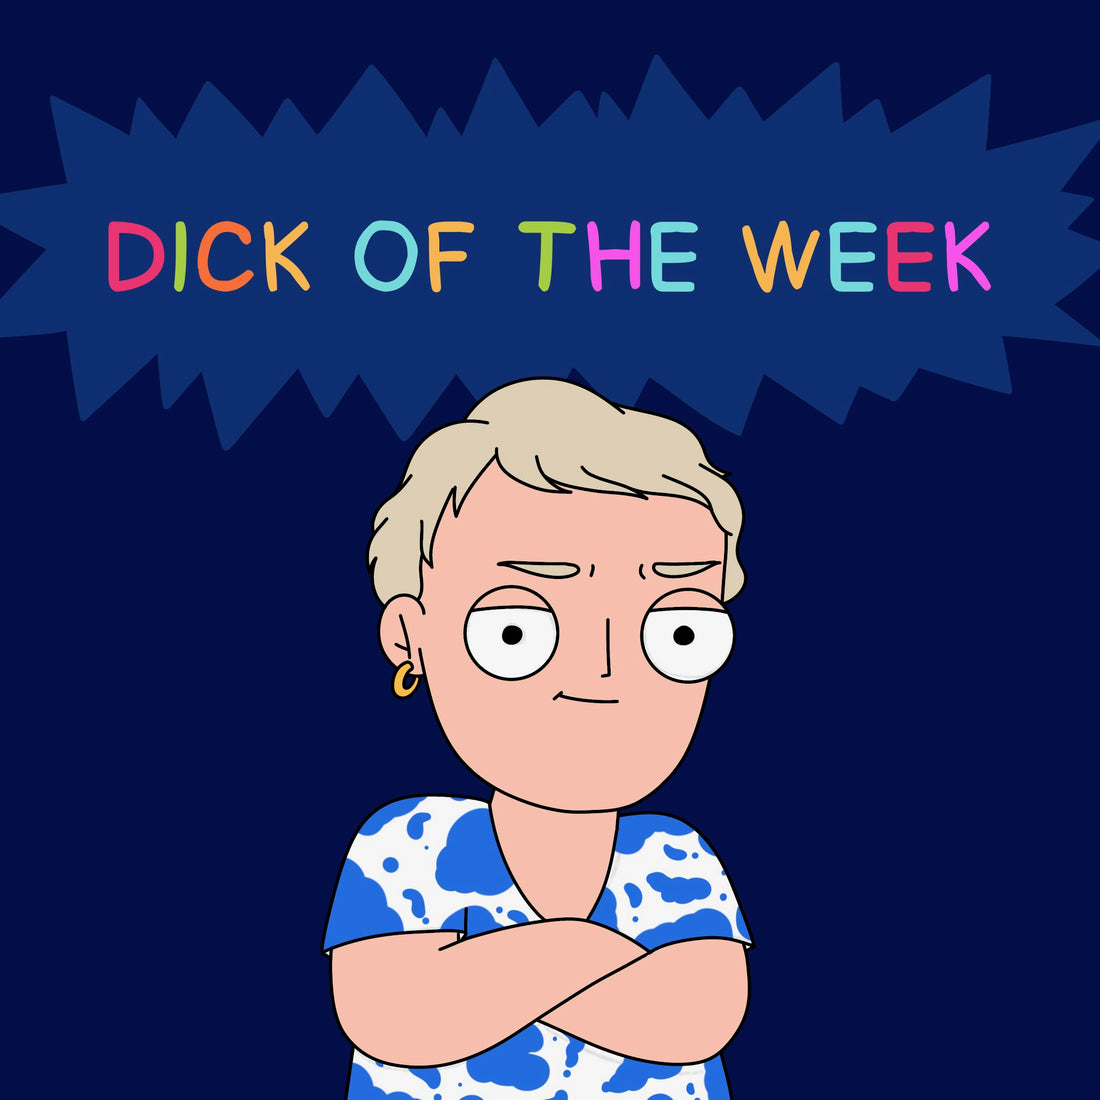 D*ck of the Week